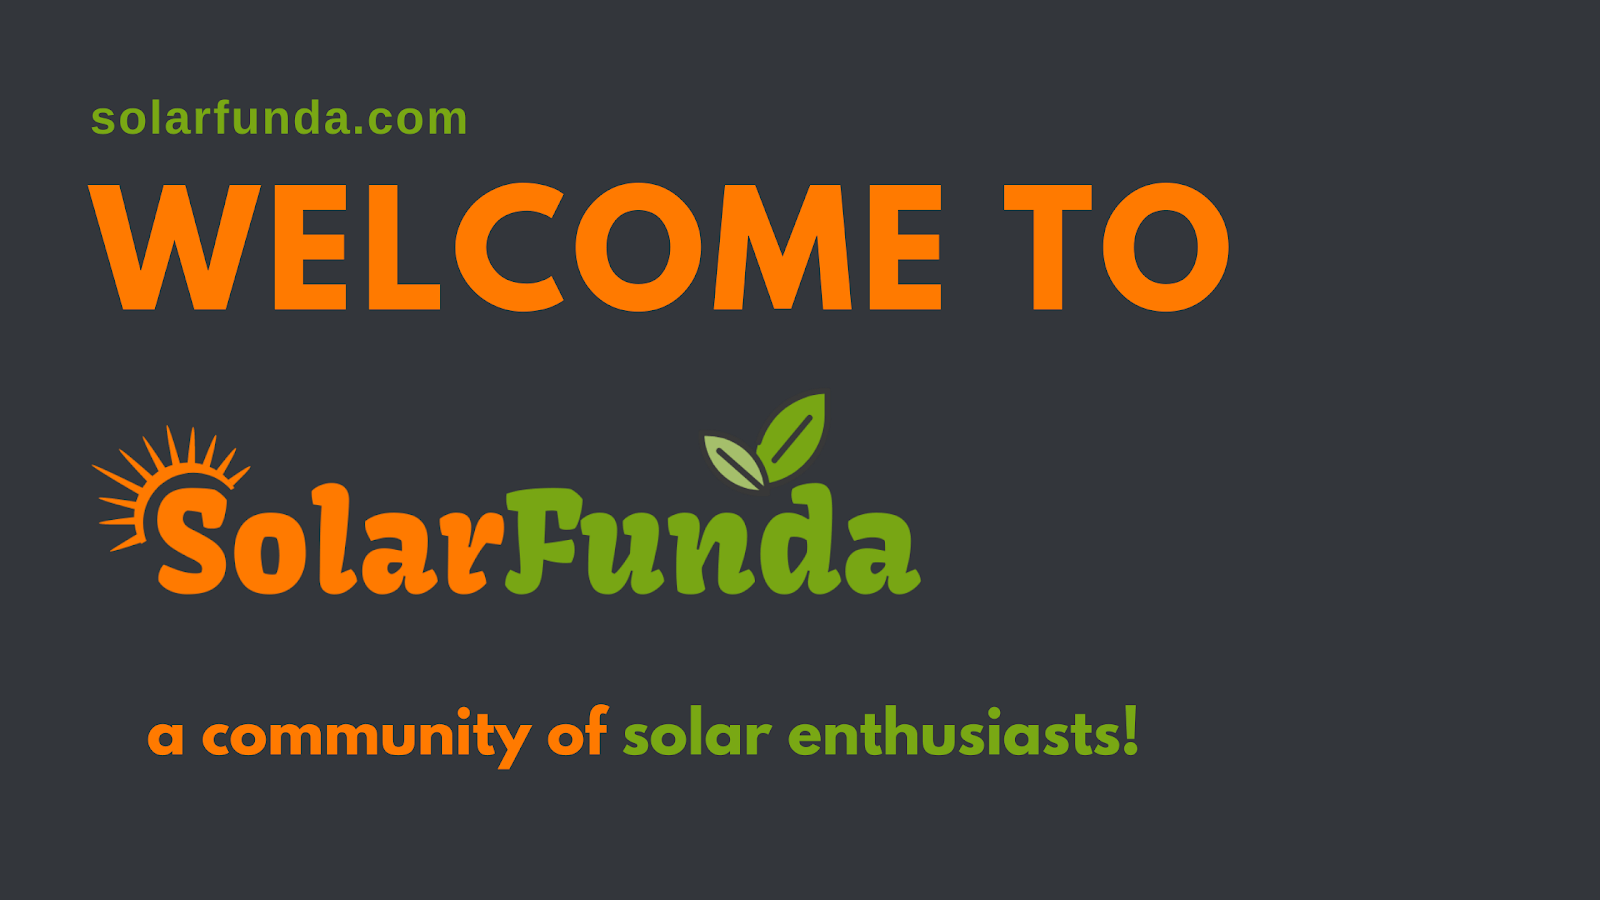 Welcome to Solar Funda!